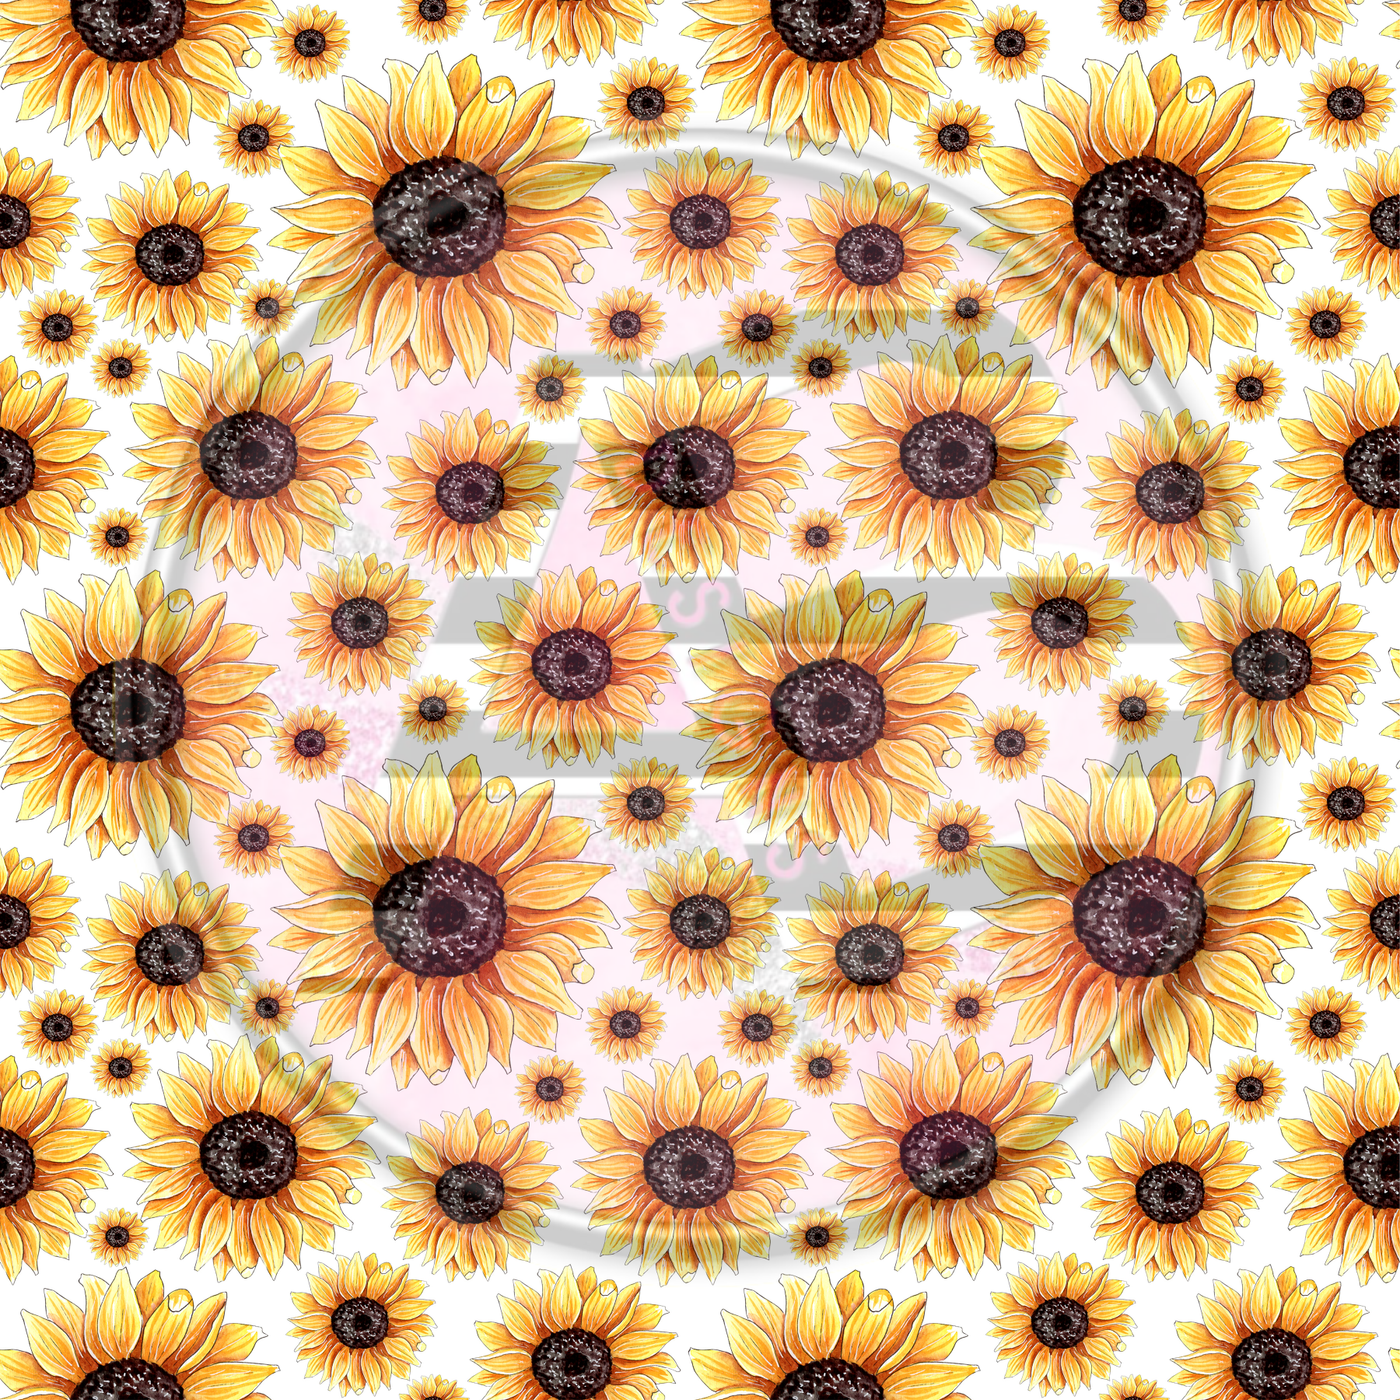 Adhesive Patterned Vinyl - Sunflower 11